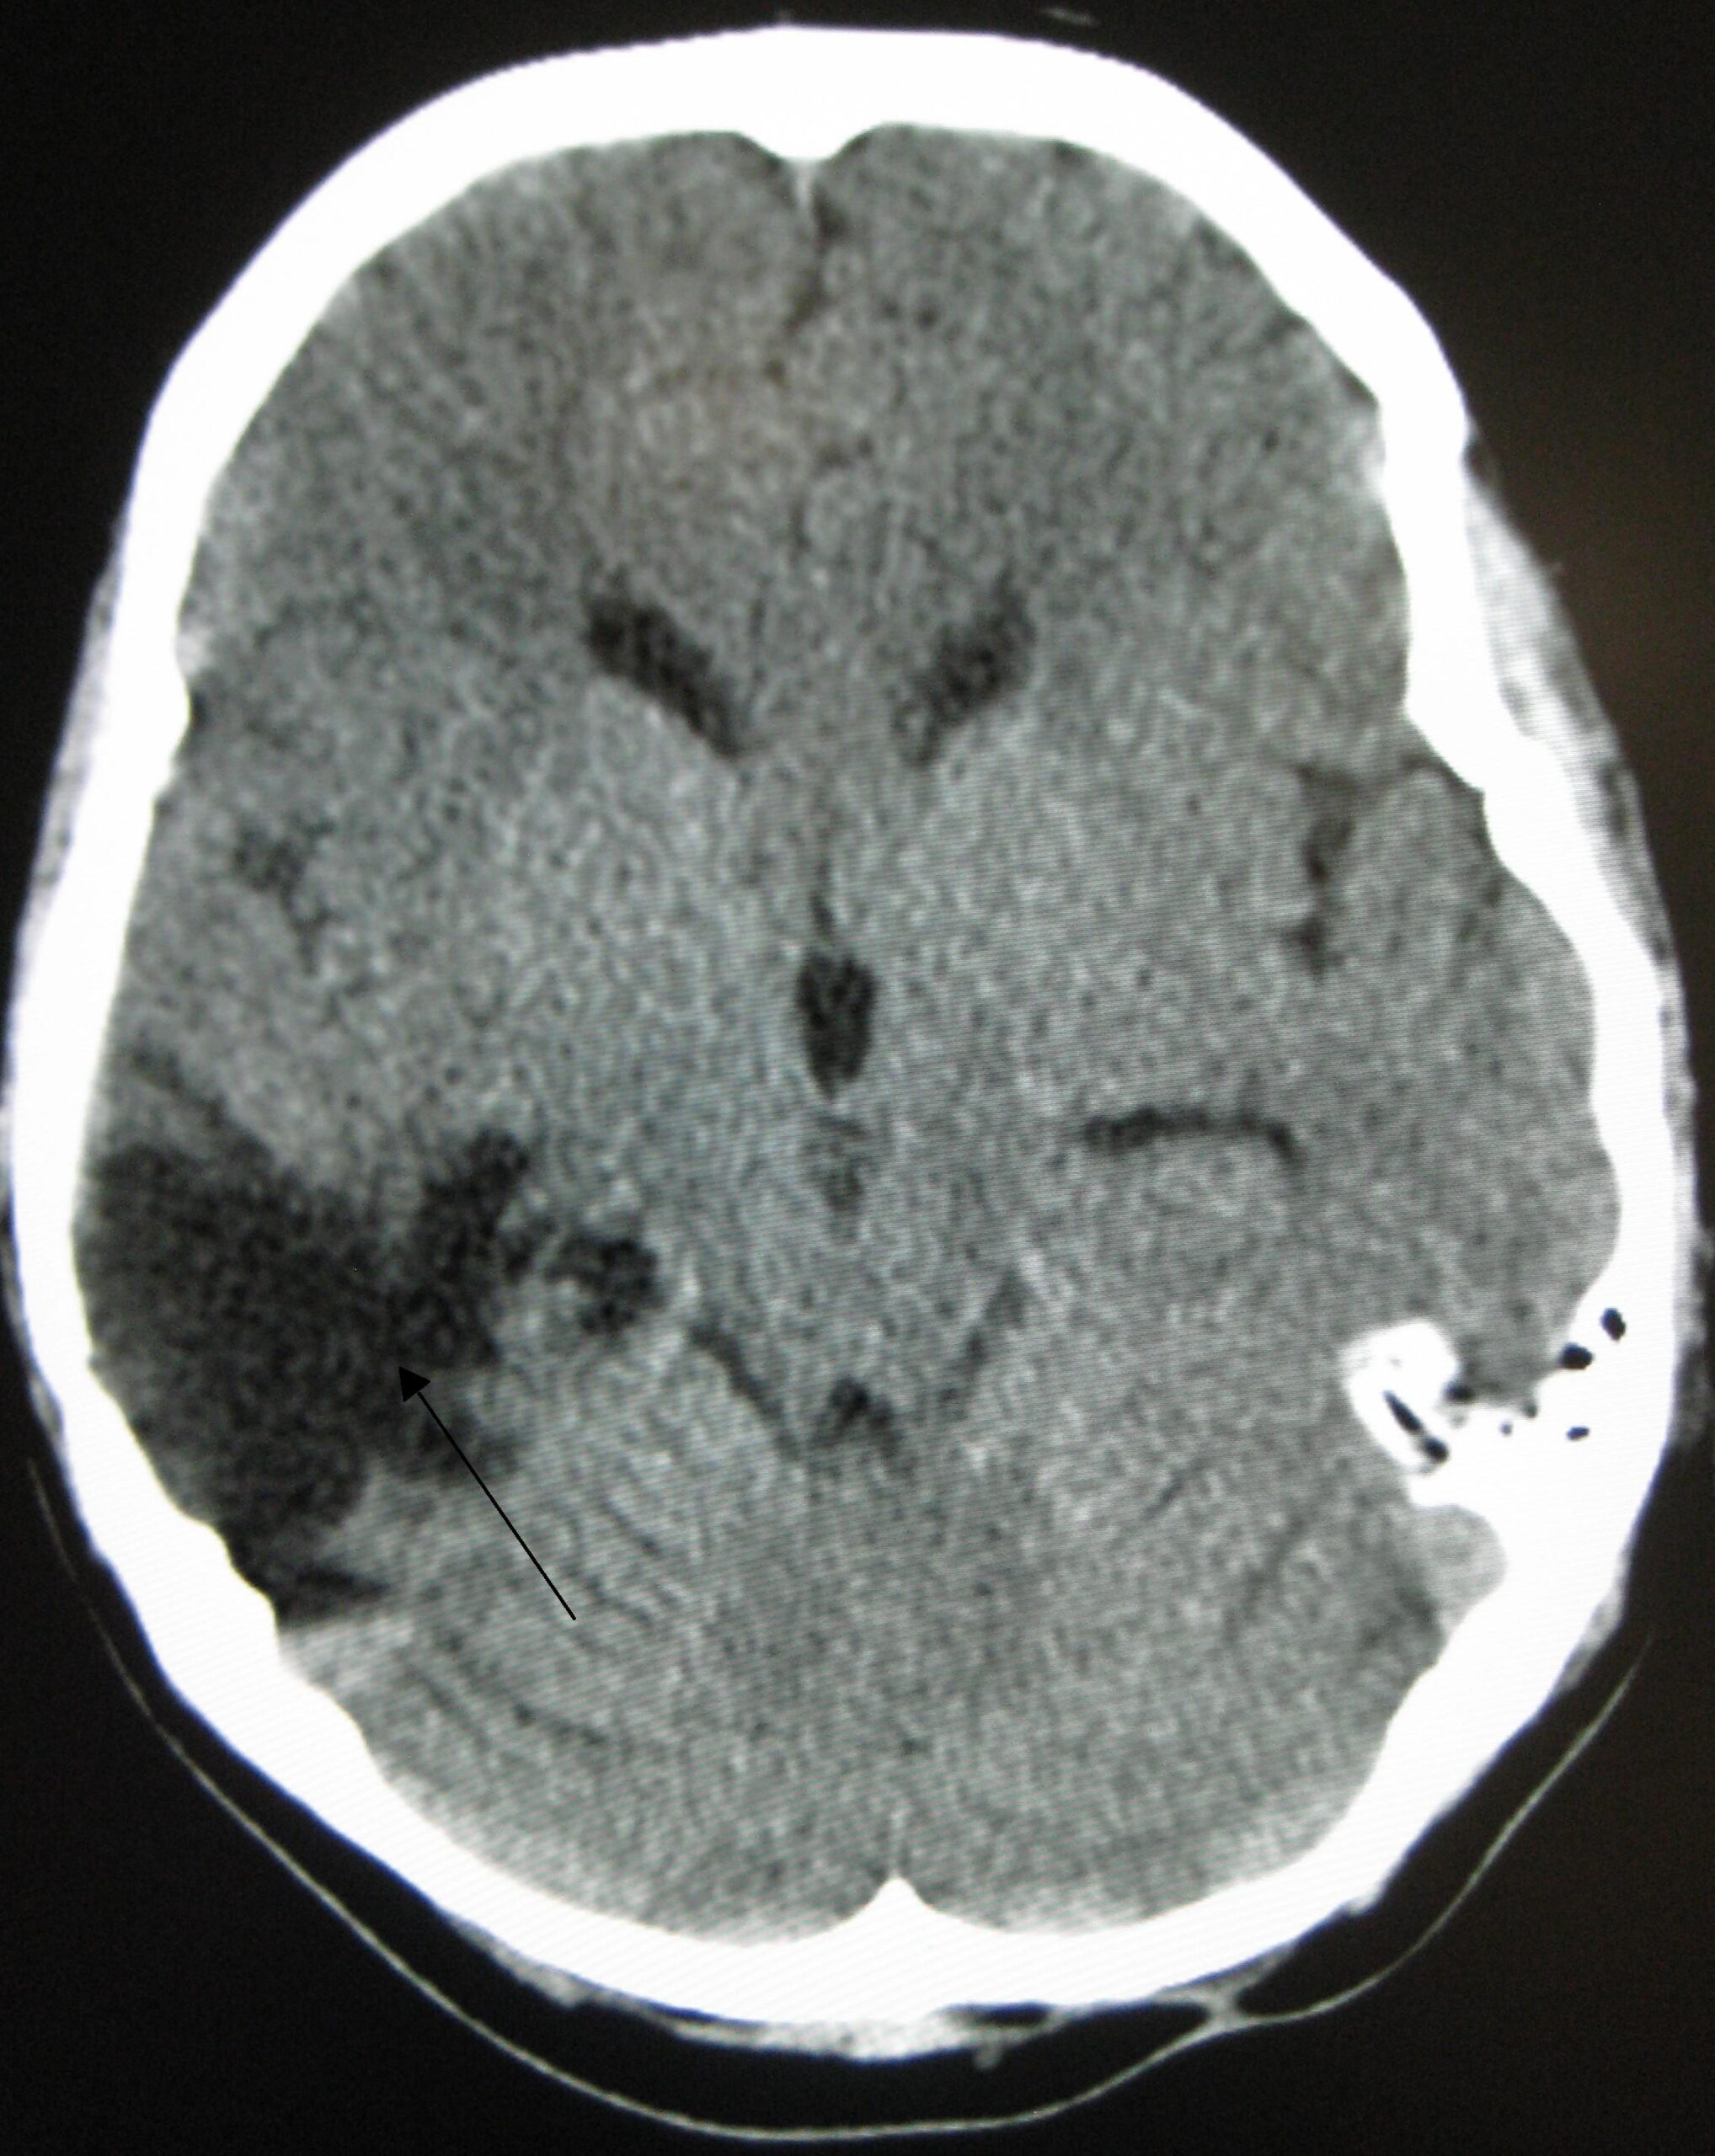 Traumatic Brain Injury Scan